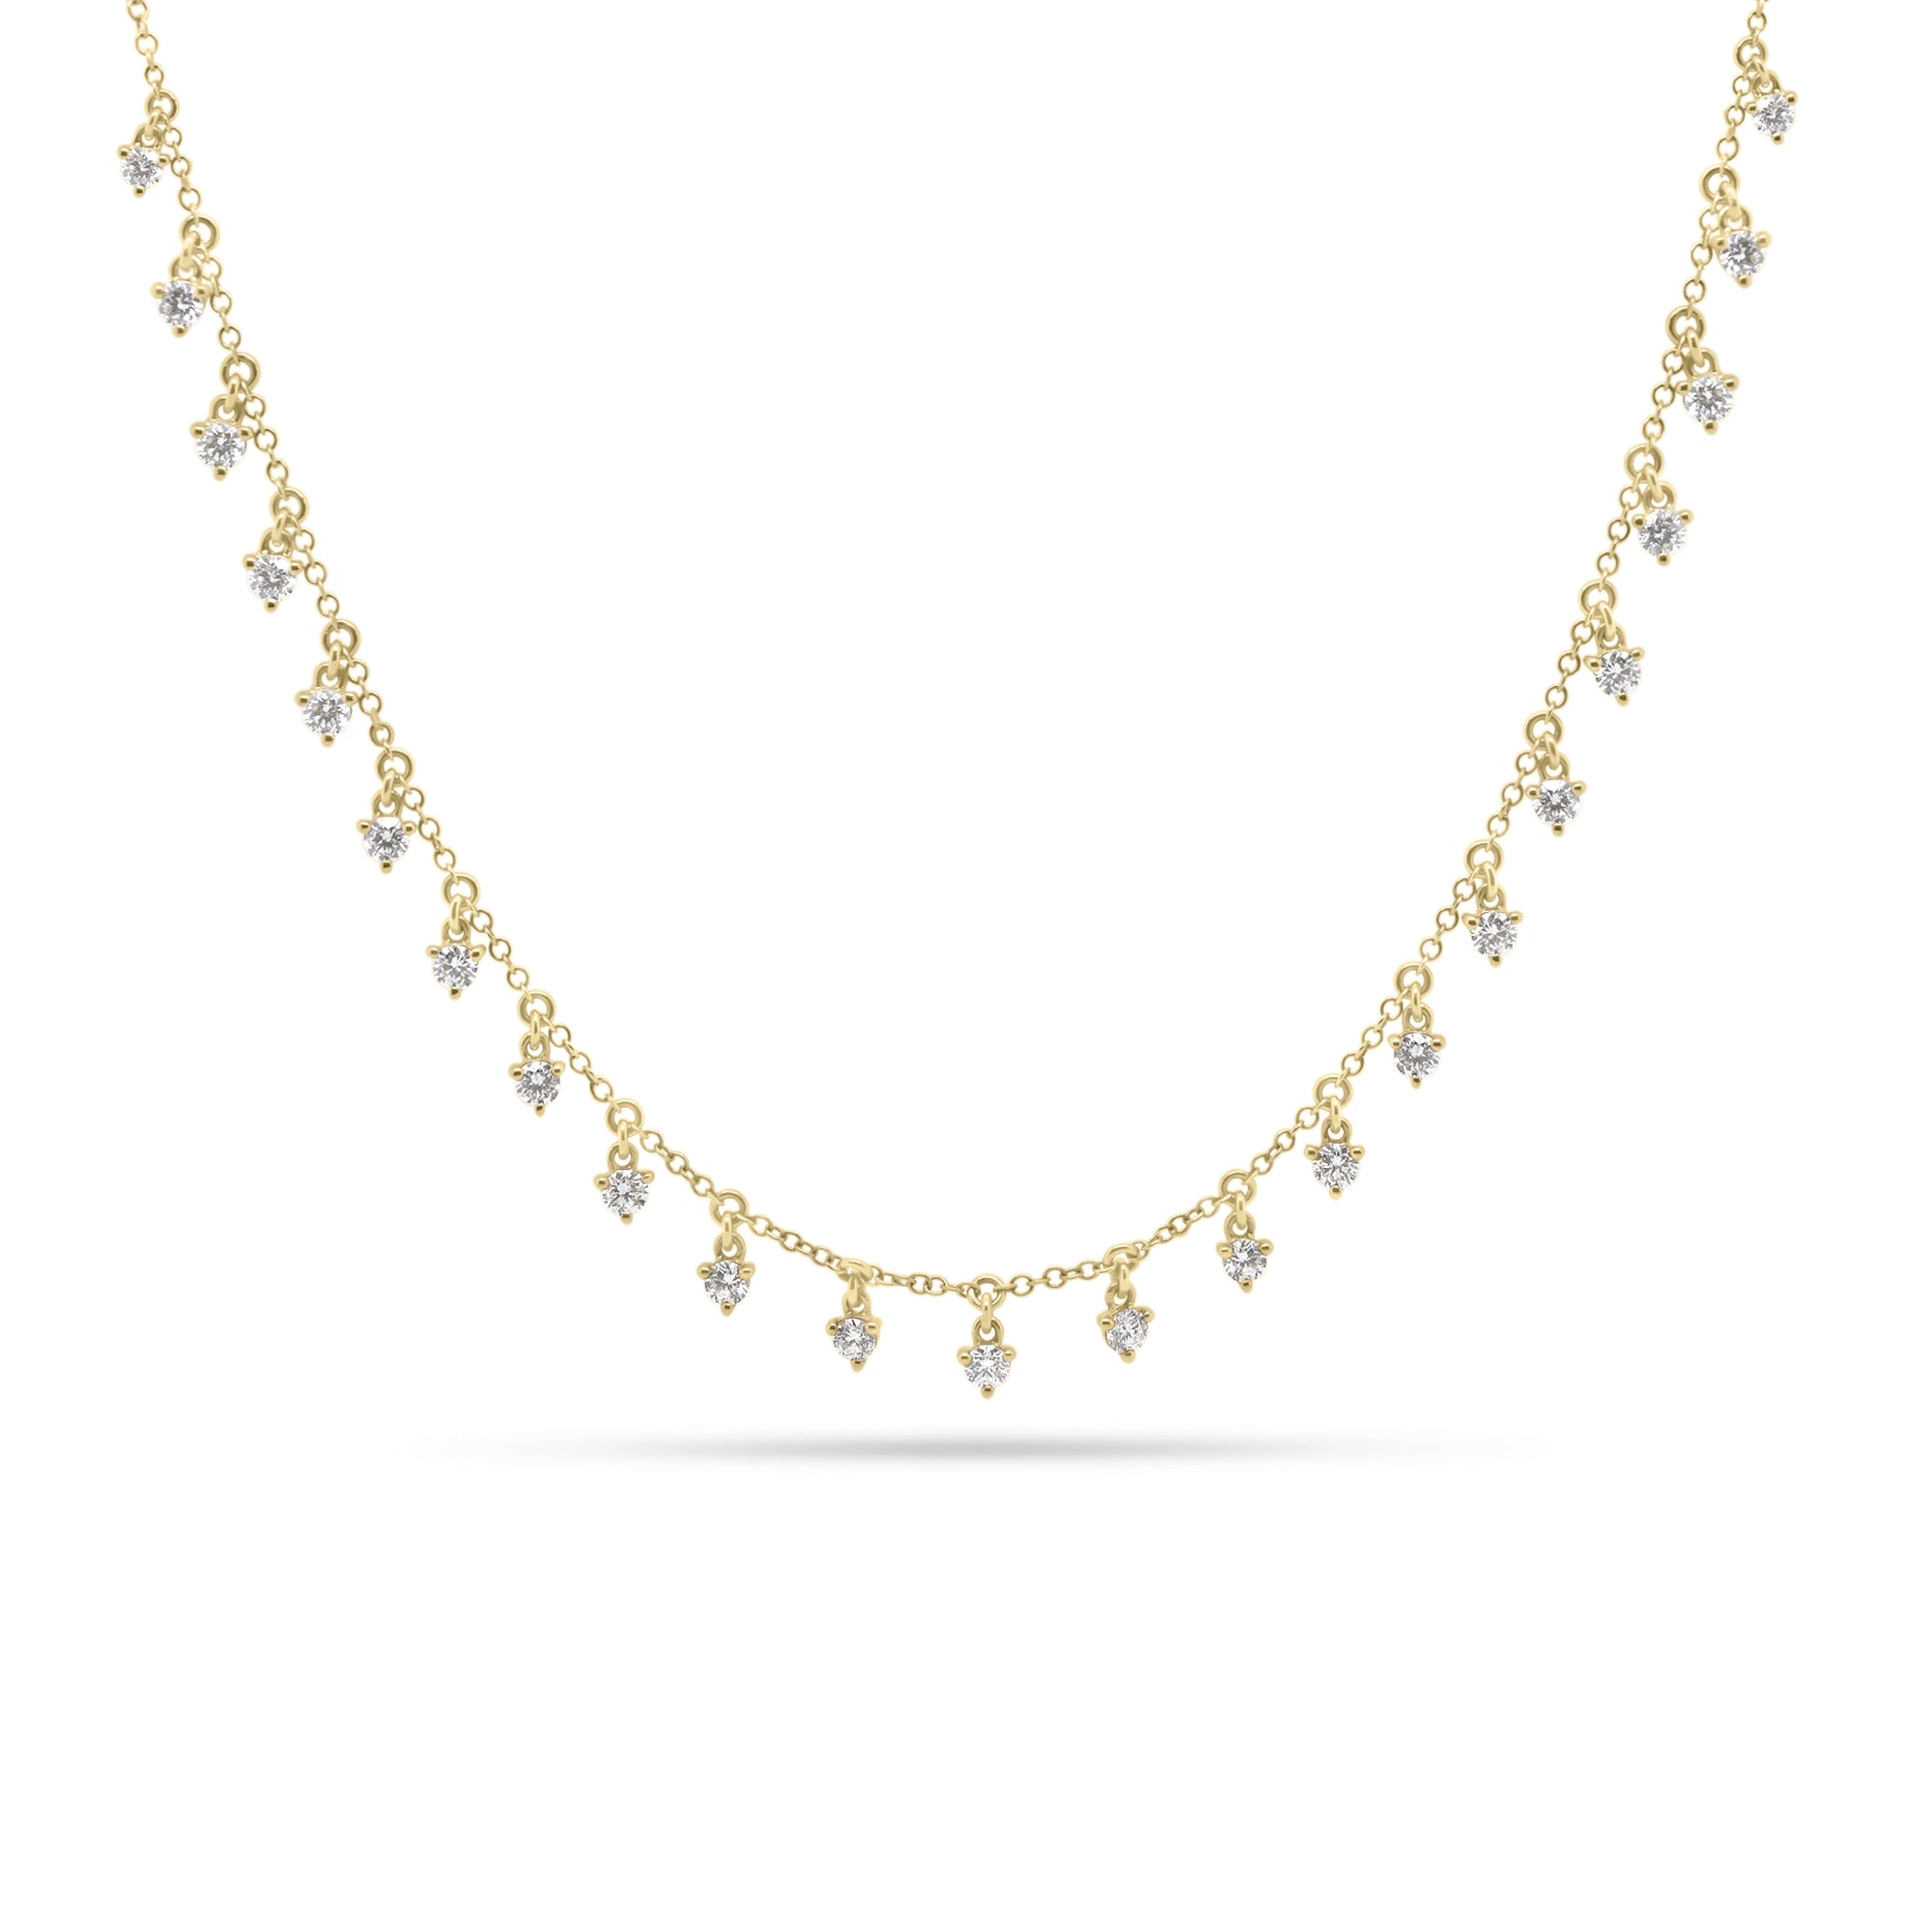 Diamond Drip Necklace  - 14K gold weighing 3.27 grams  - 23 round diamonds totaling 1.04 carats